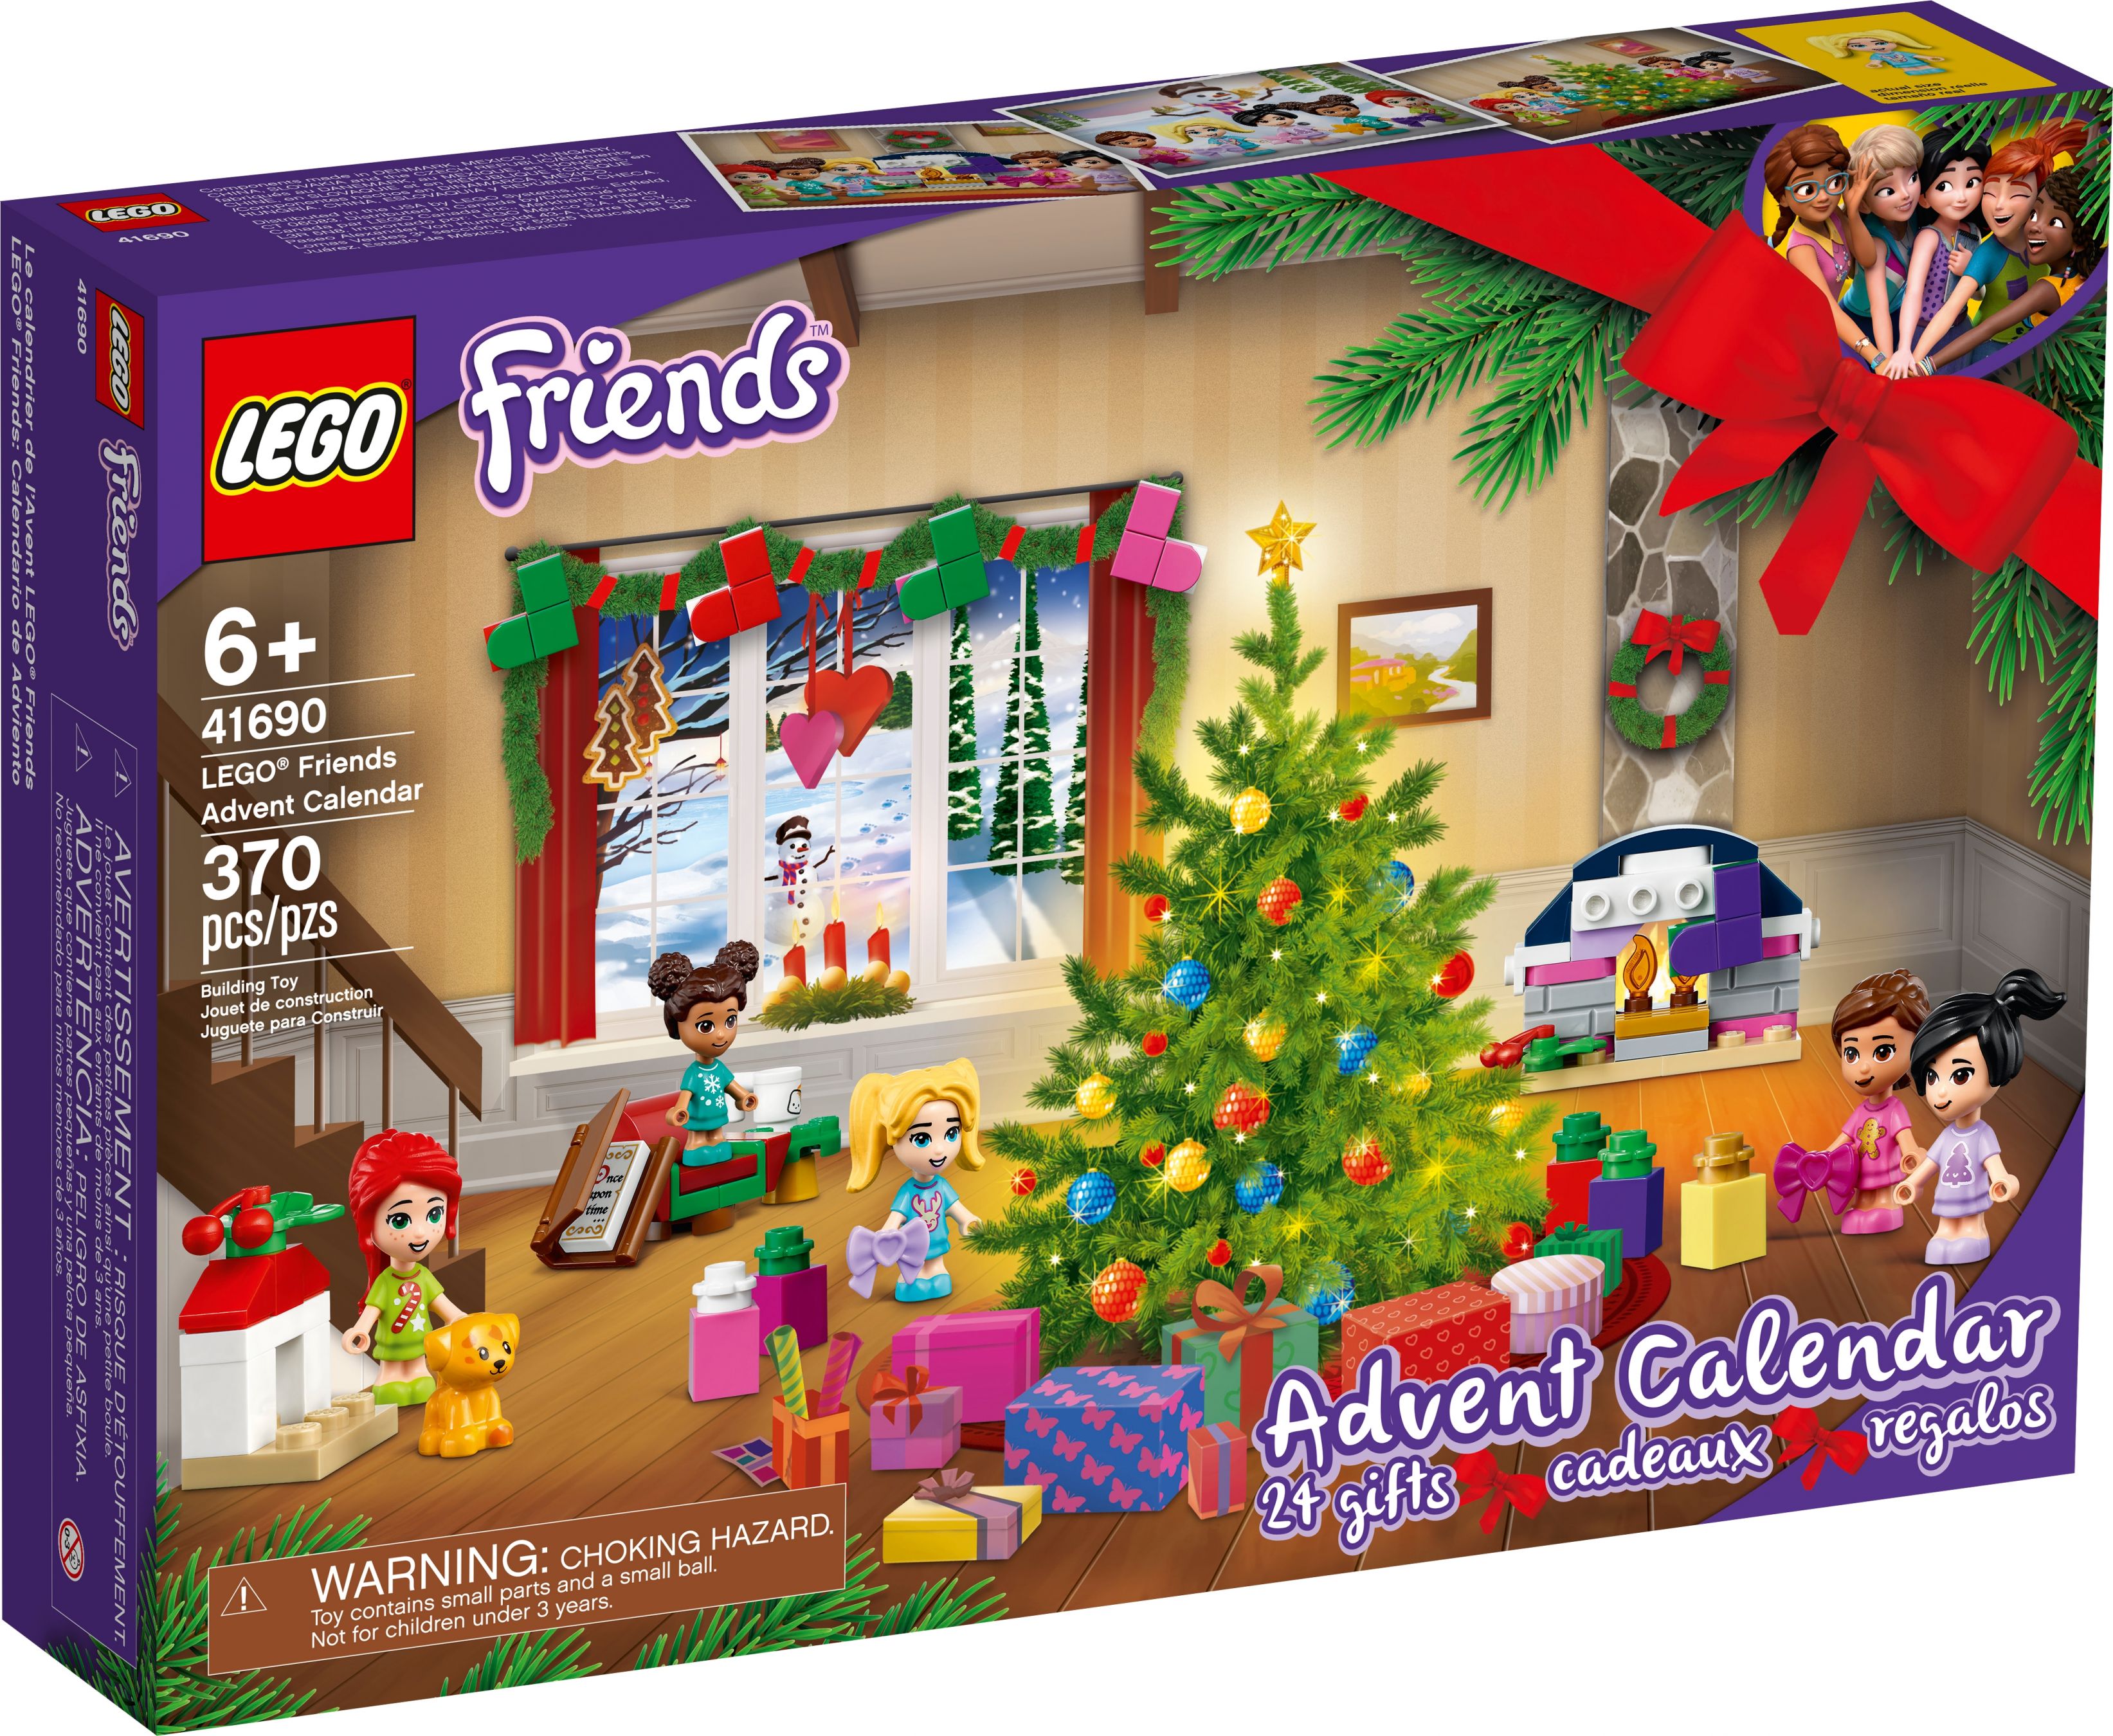 LEGO Friends 41690 LEGO® Friends Adventskalender LEGO_41690_box1_v39.jpg